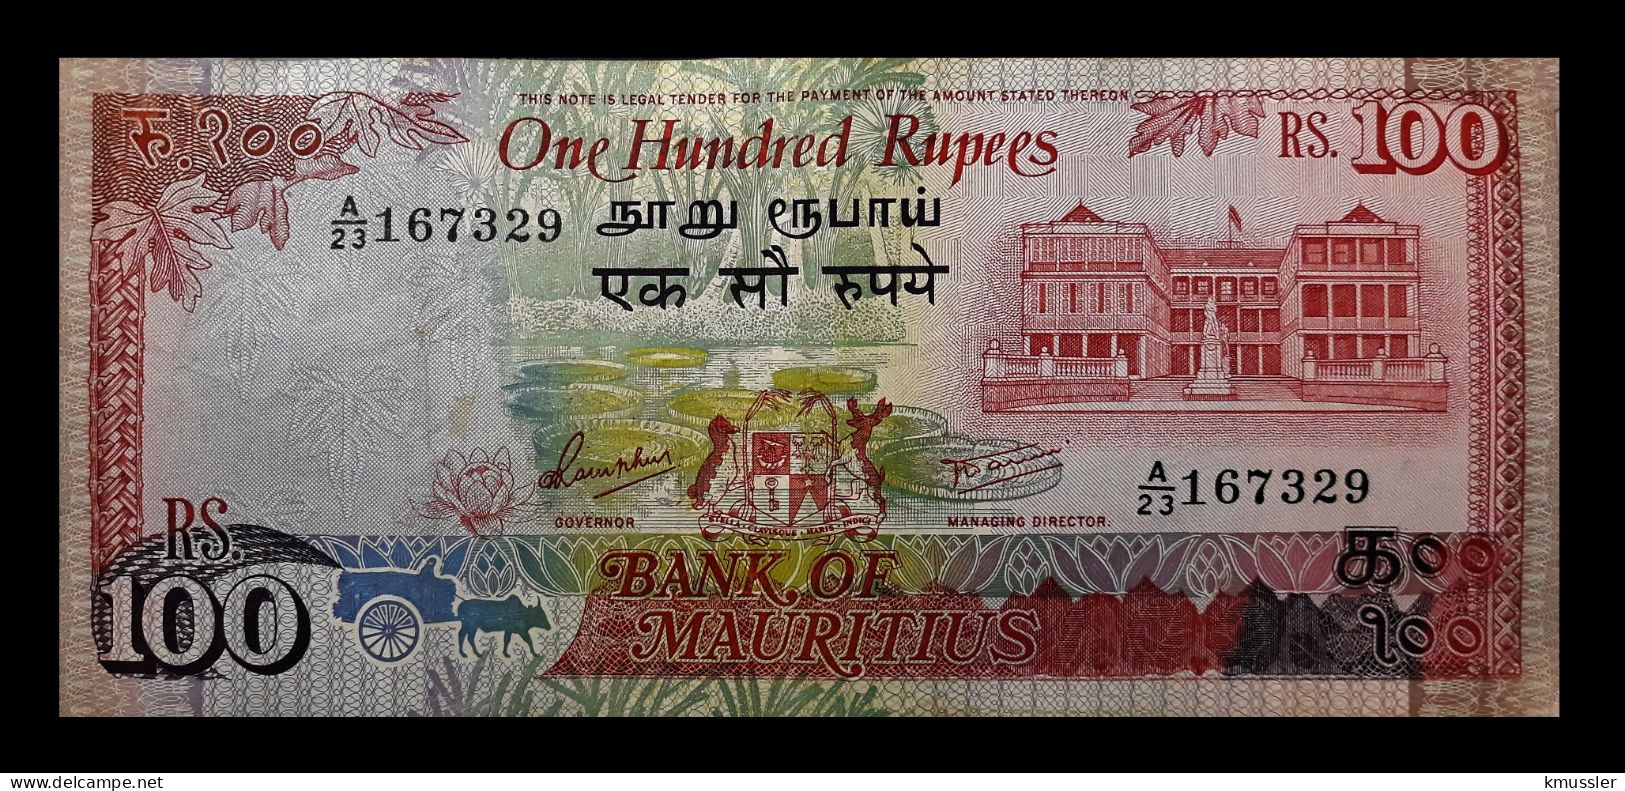 # # # Banknote Mauritius 100 Rupees # # # - Mauricio